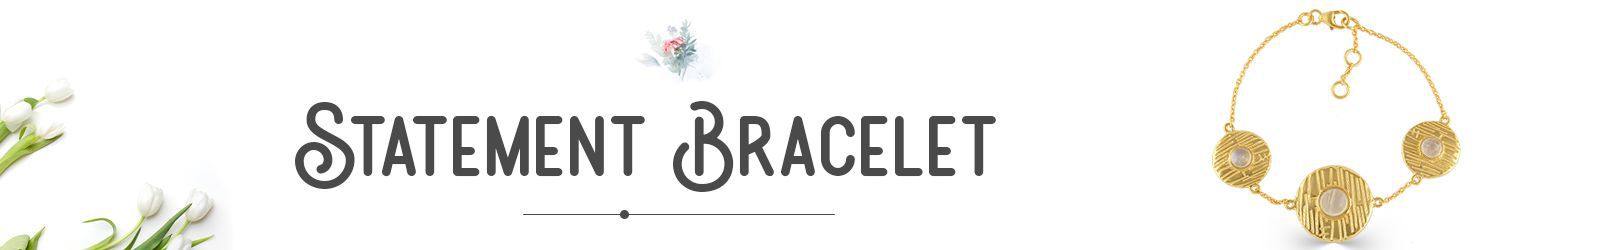 Statement Bracelet Silver Jewelry Manufacturer, Exporter in Jaipur